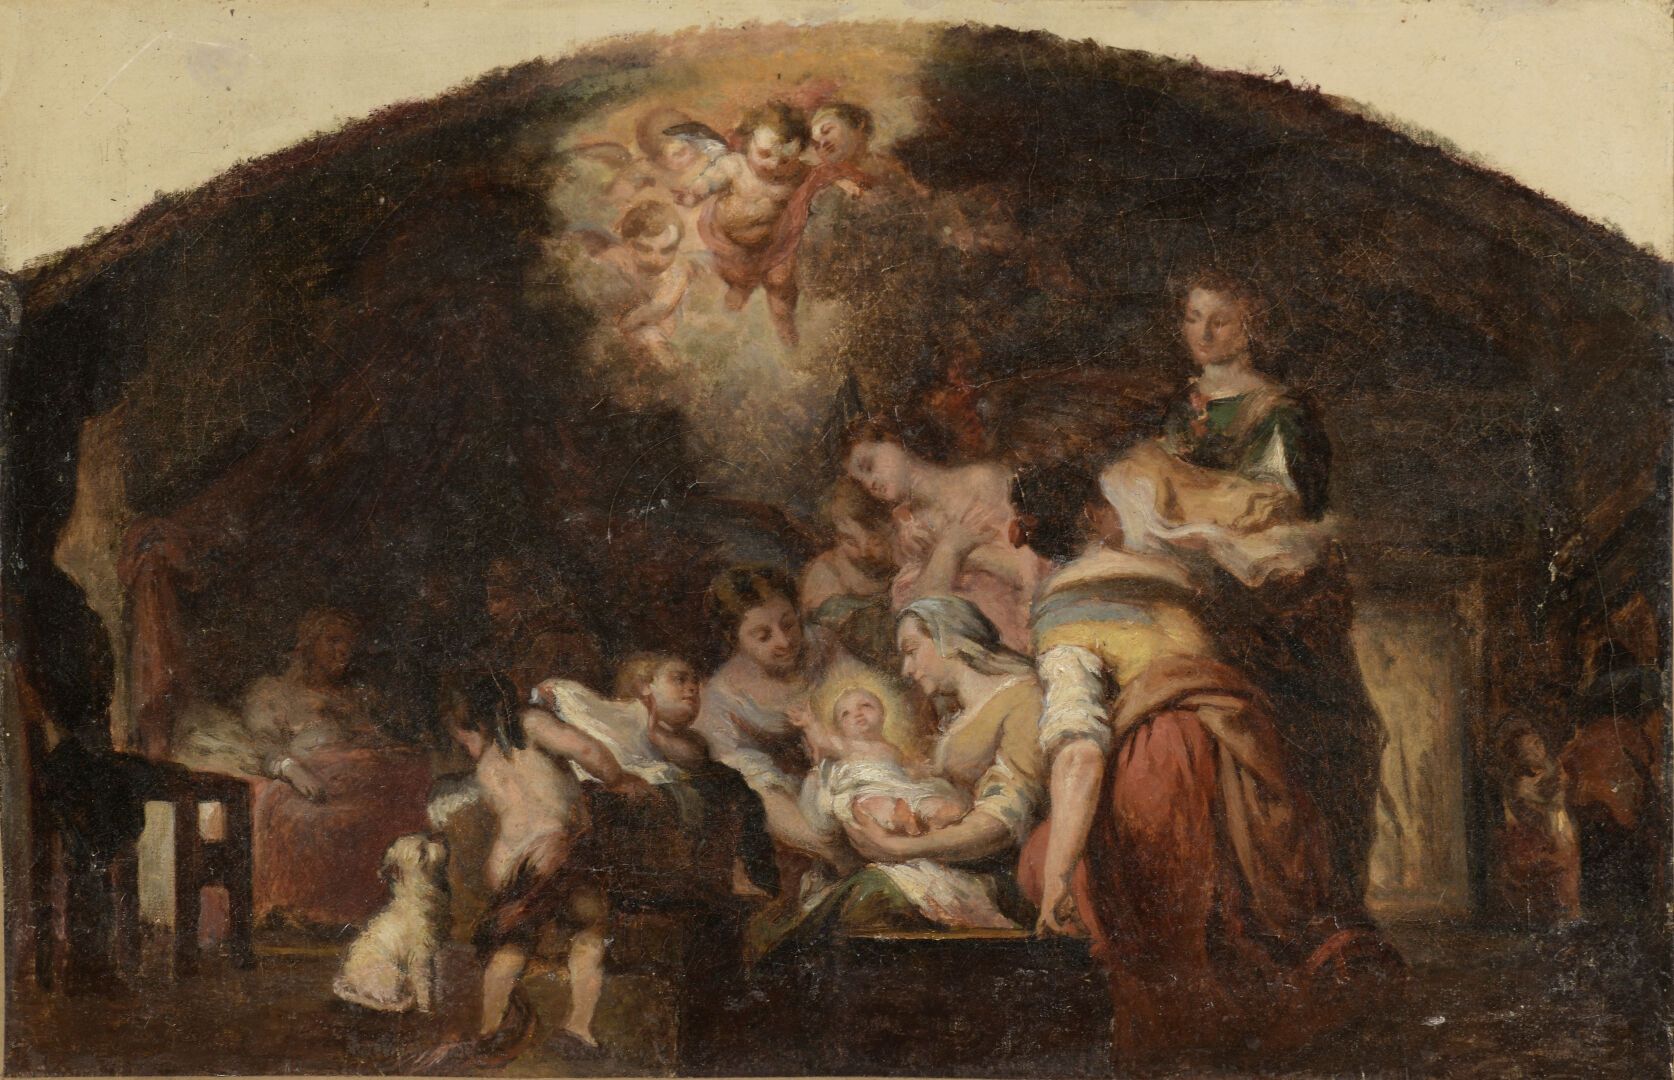 École FRANÇAISE du XVIIIe siècle 18世纪的法国学校

基督的诞生

布面油画。

右边有泪痕。

27 x 41 厘米